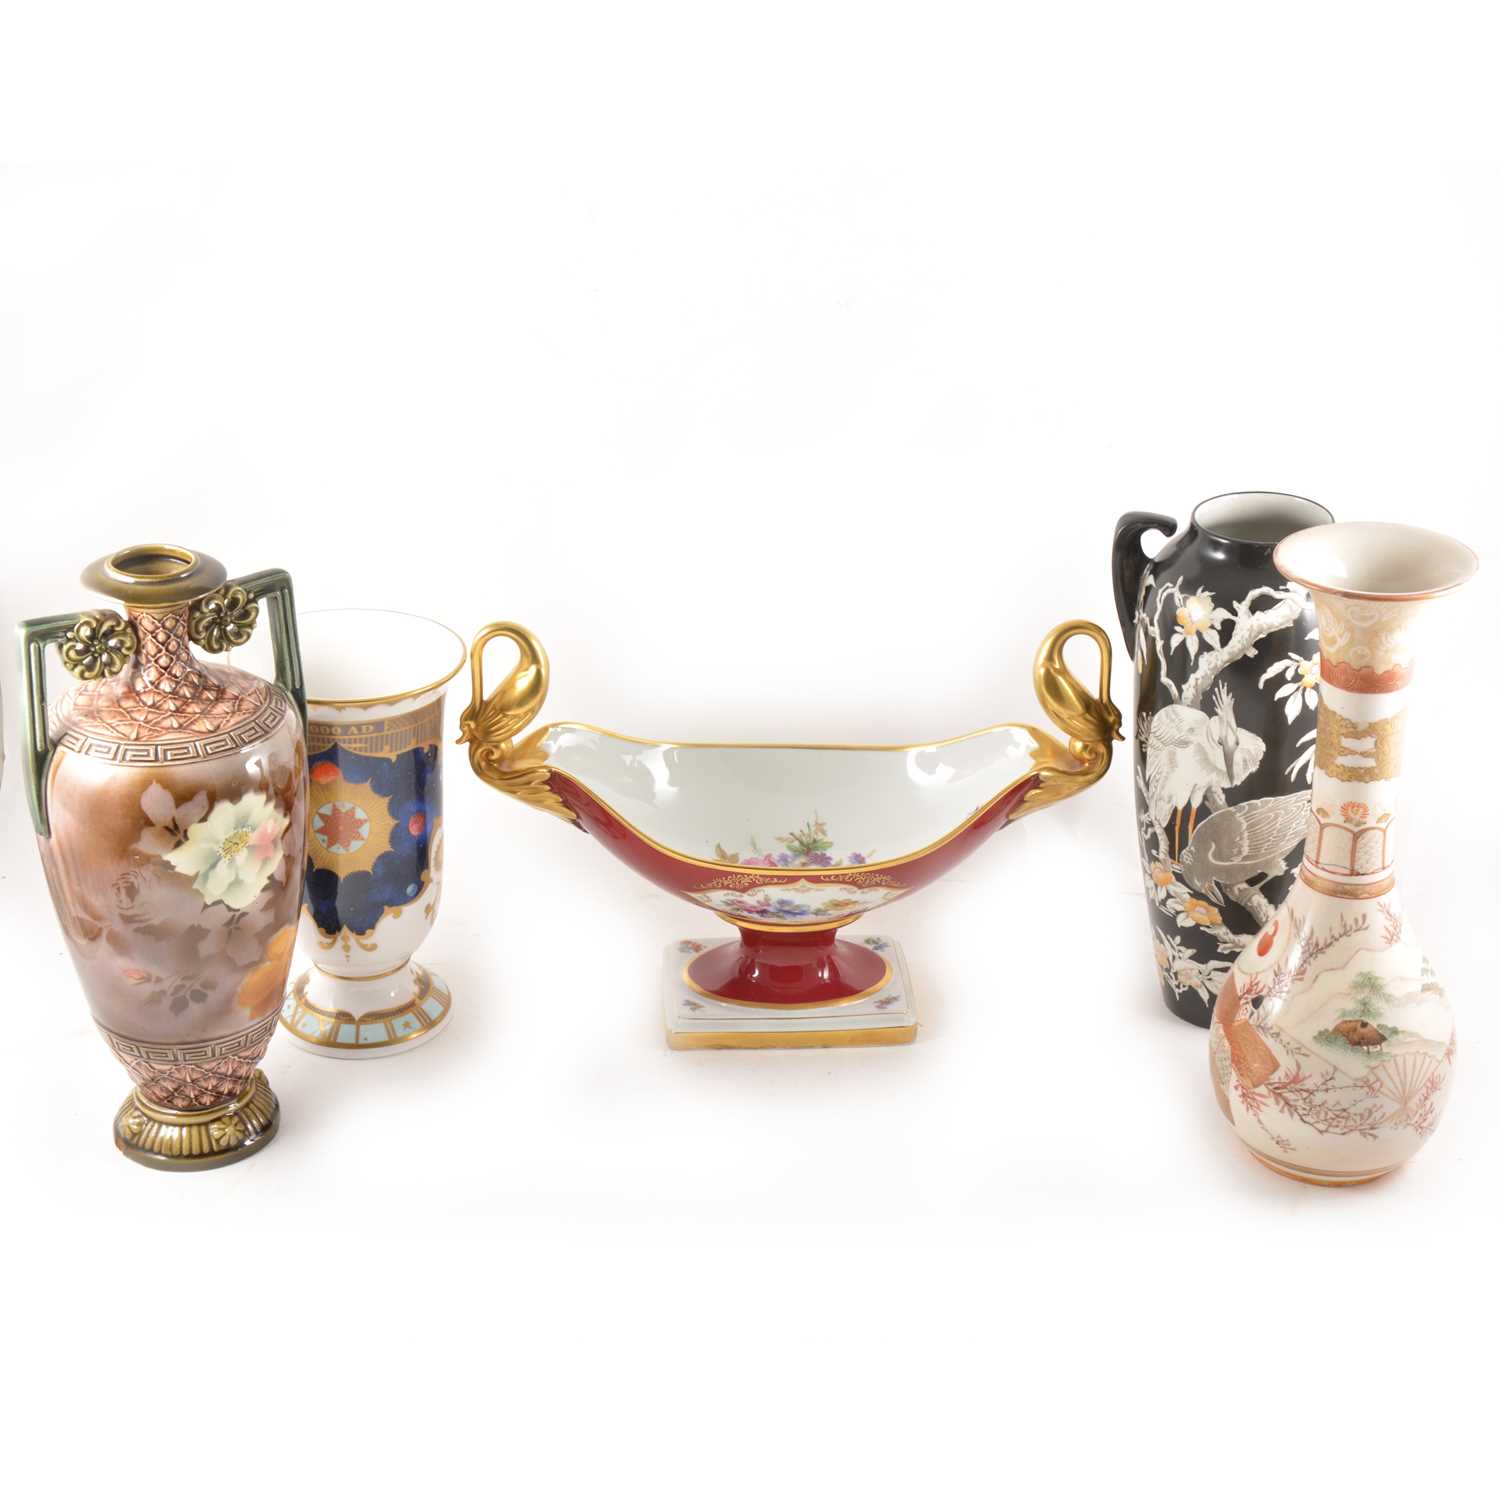 Lot 51 - Royal Worcester Millenium vase, similar box, and other ceramics